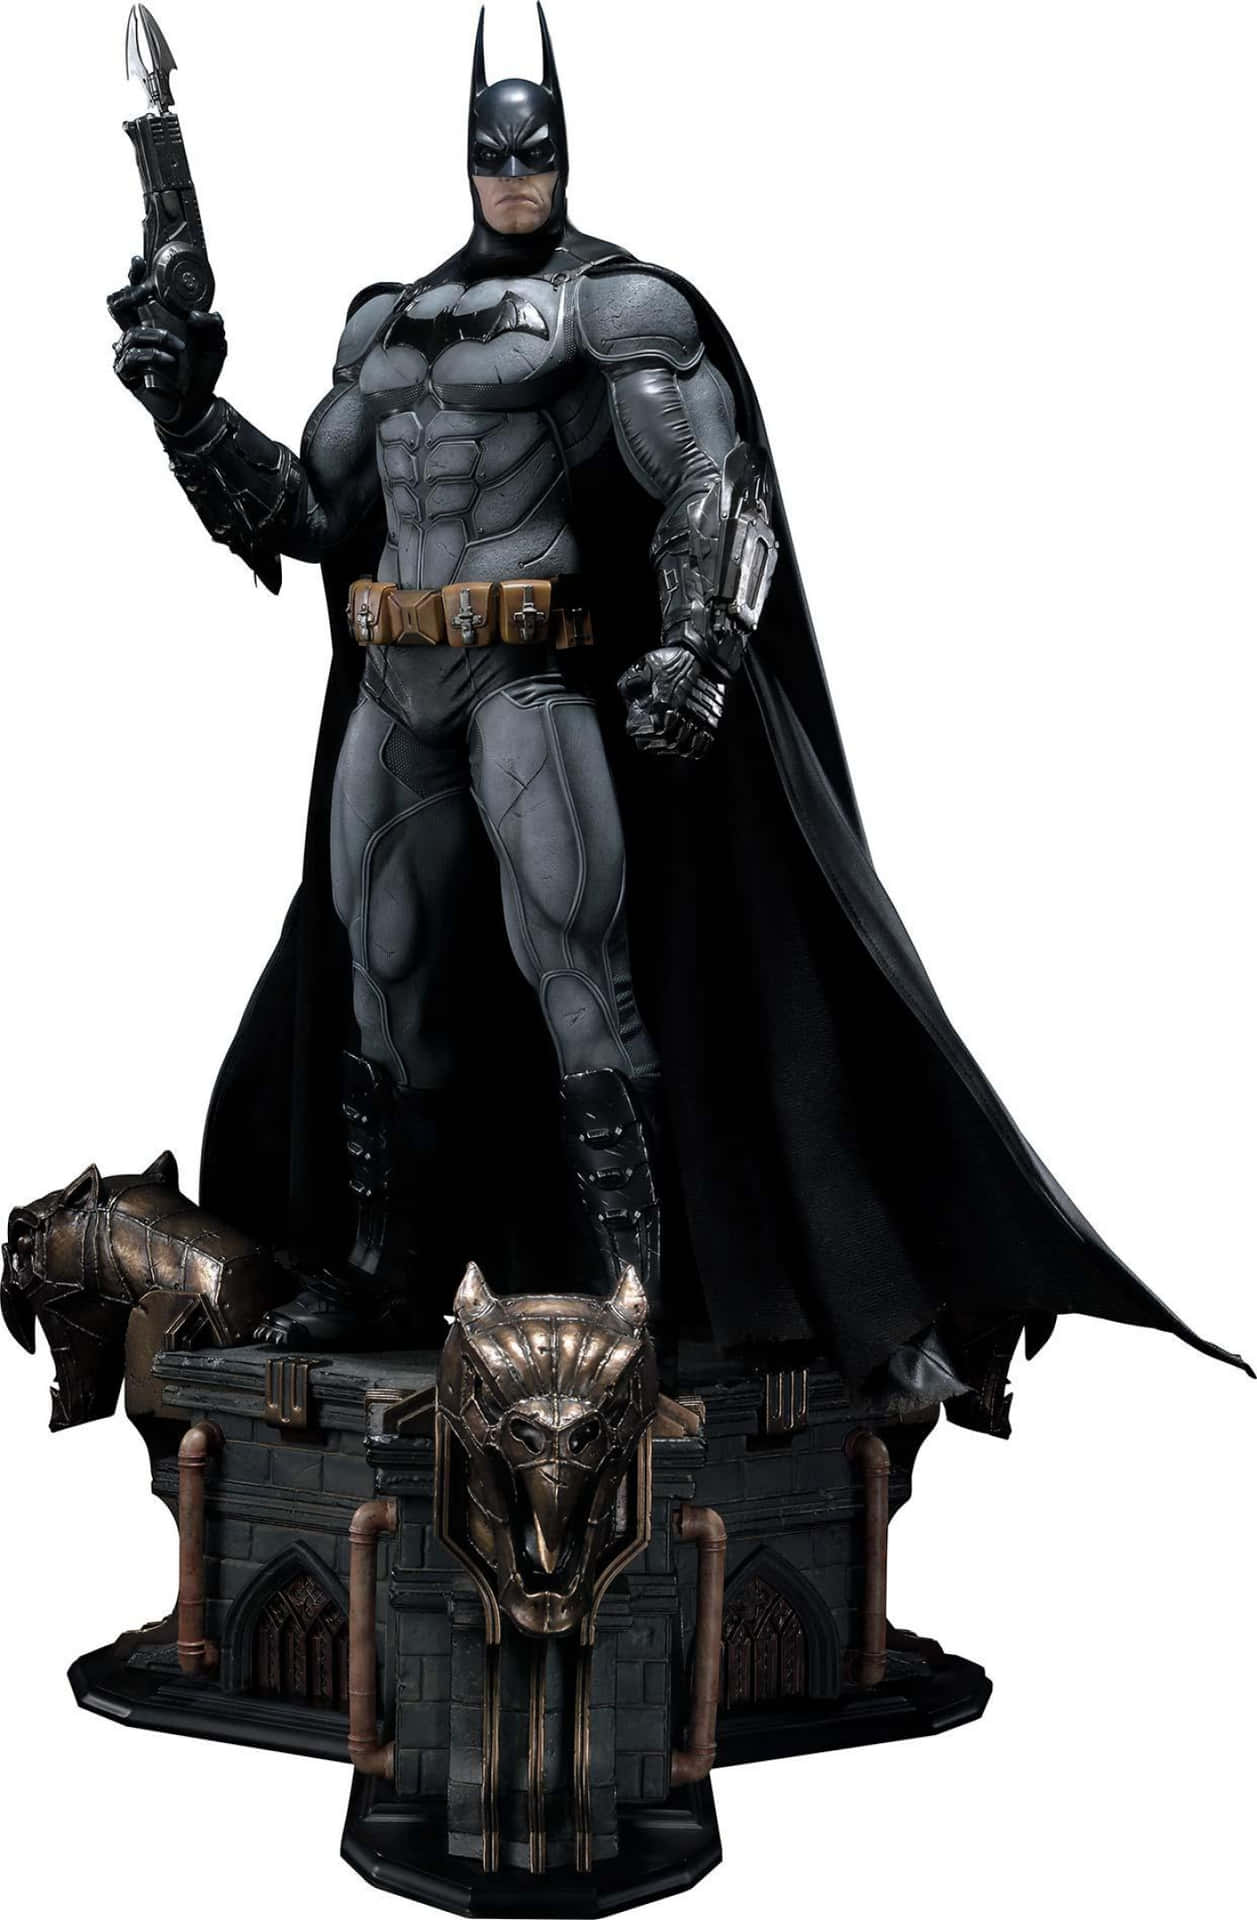 The Dark Knight - Bat Suit Up Close Wallpaper